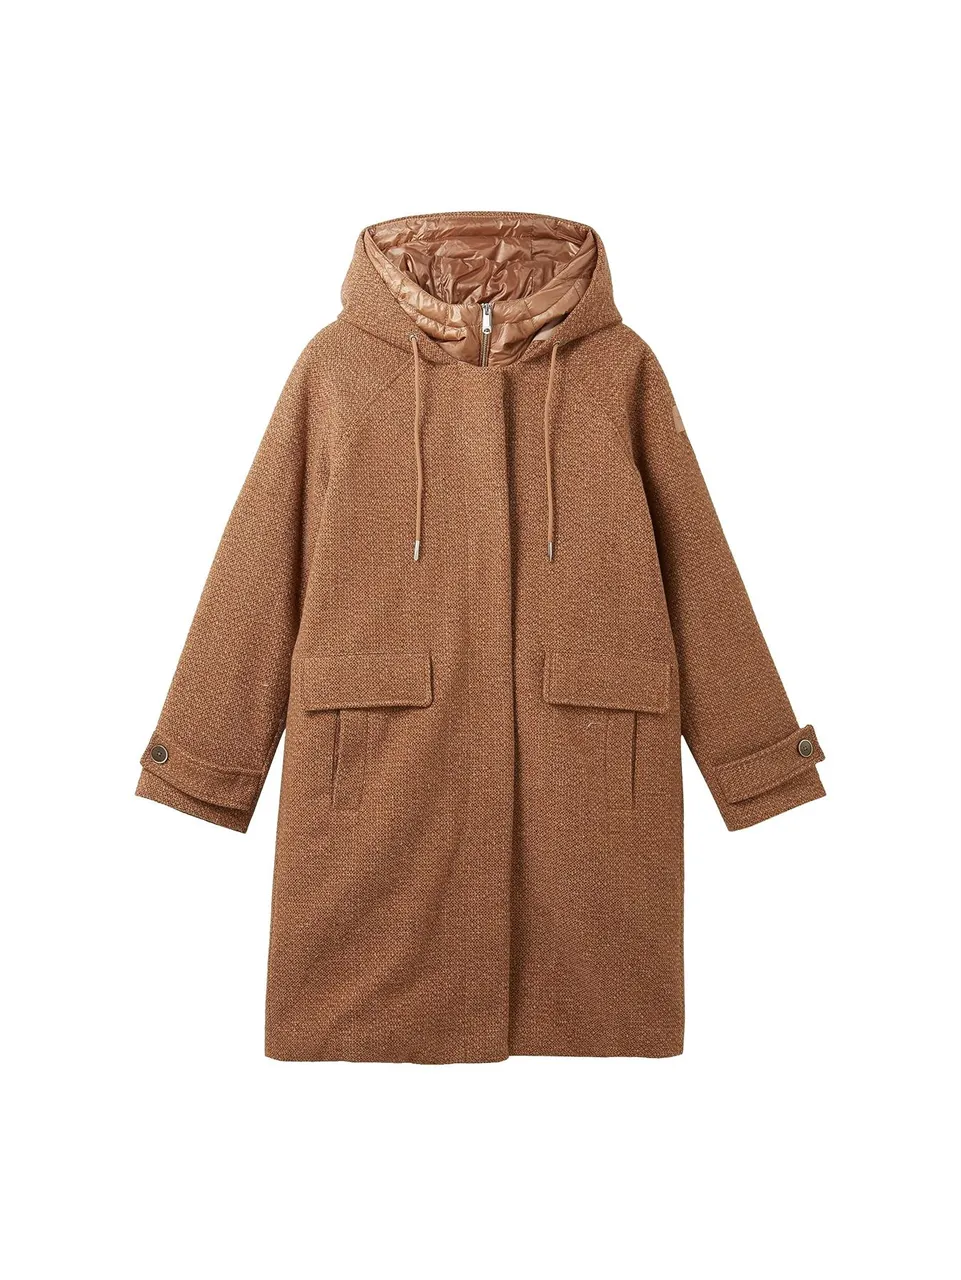 Kurzmäntel fabric mix hooded coat